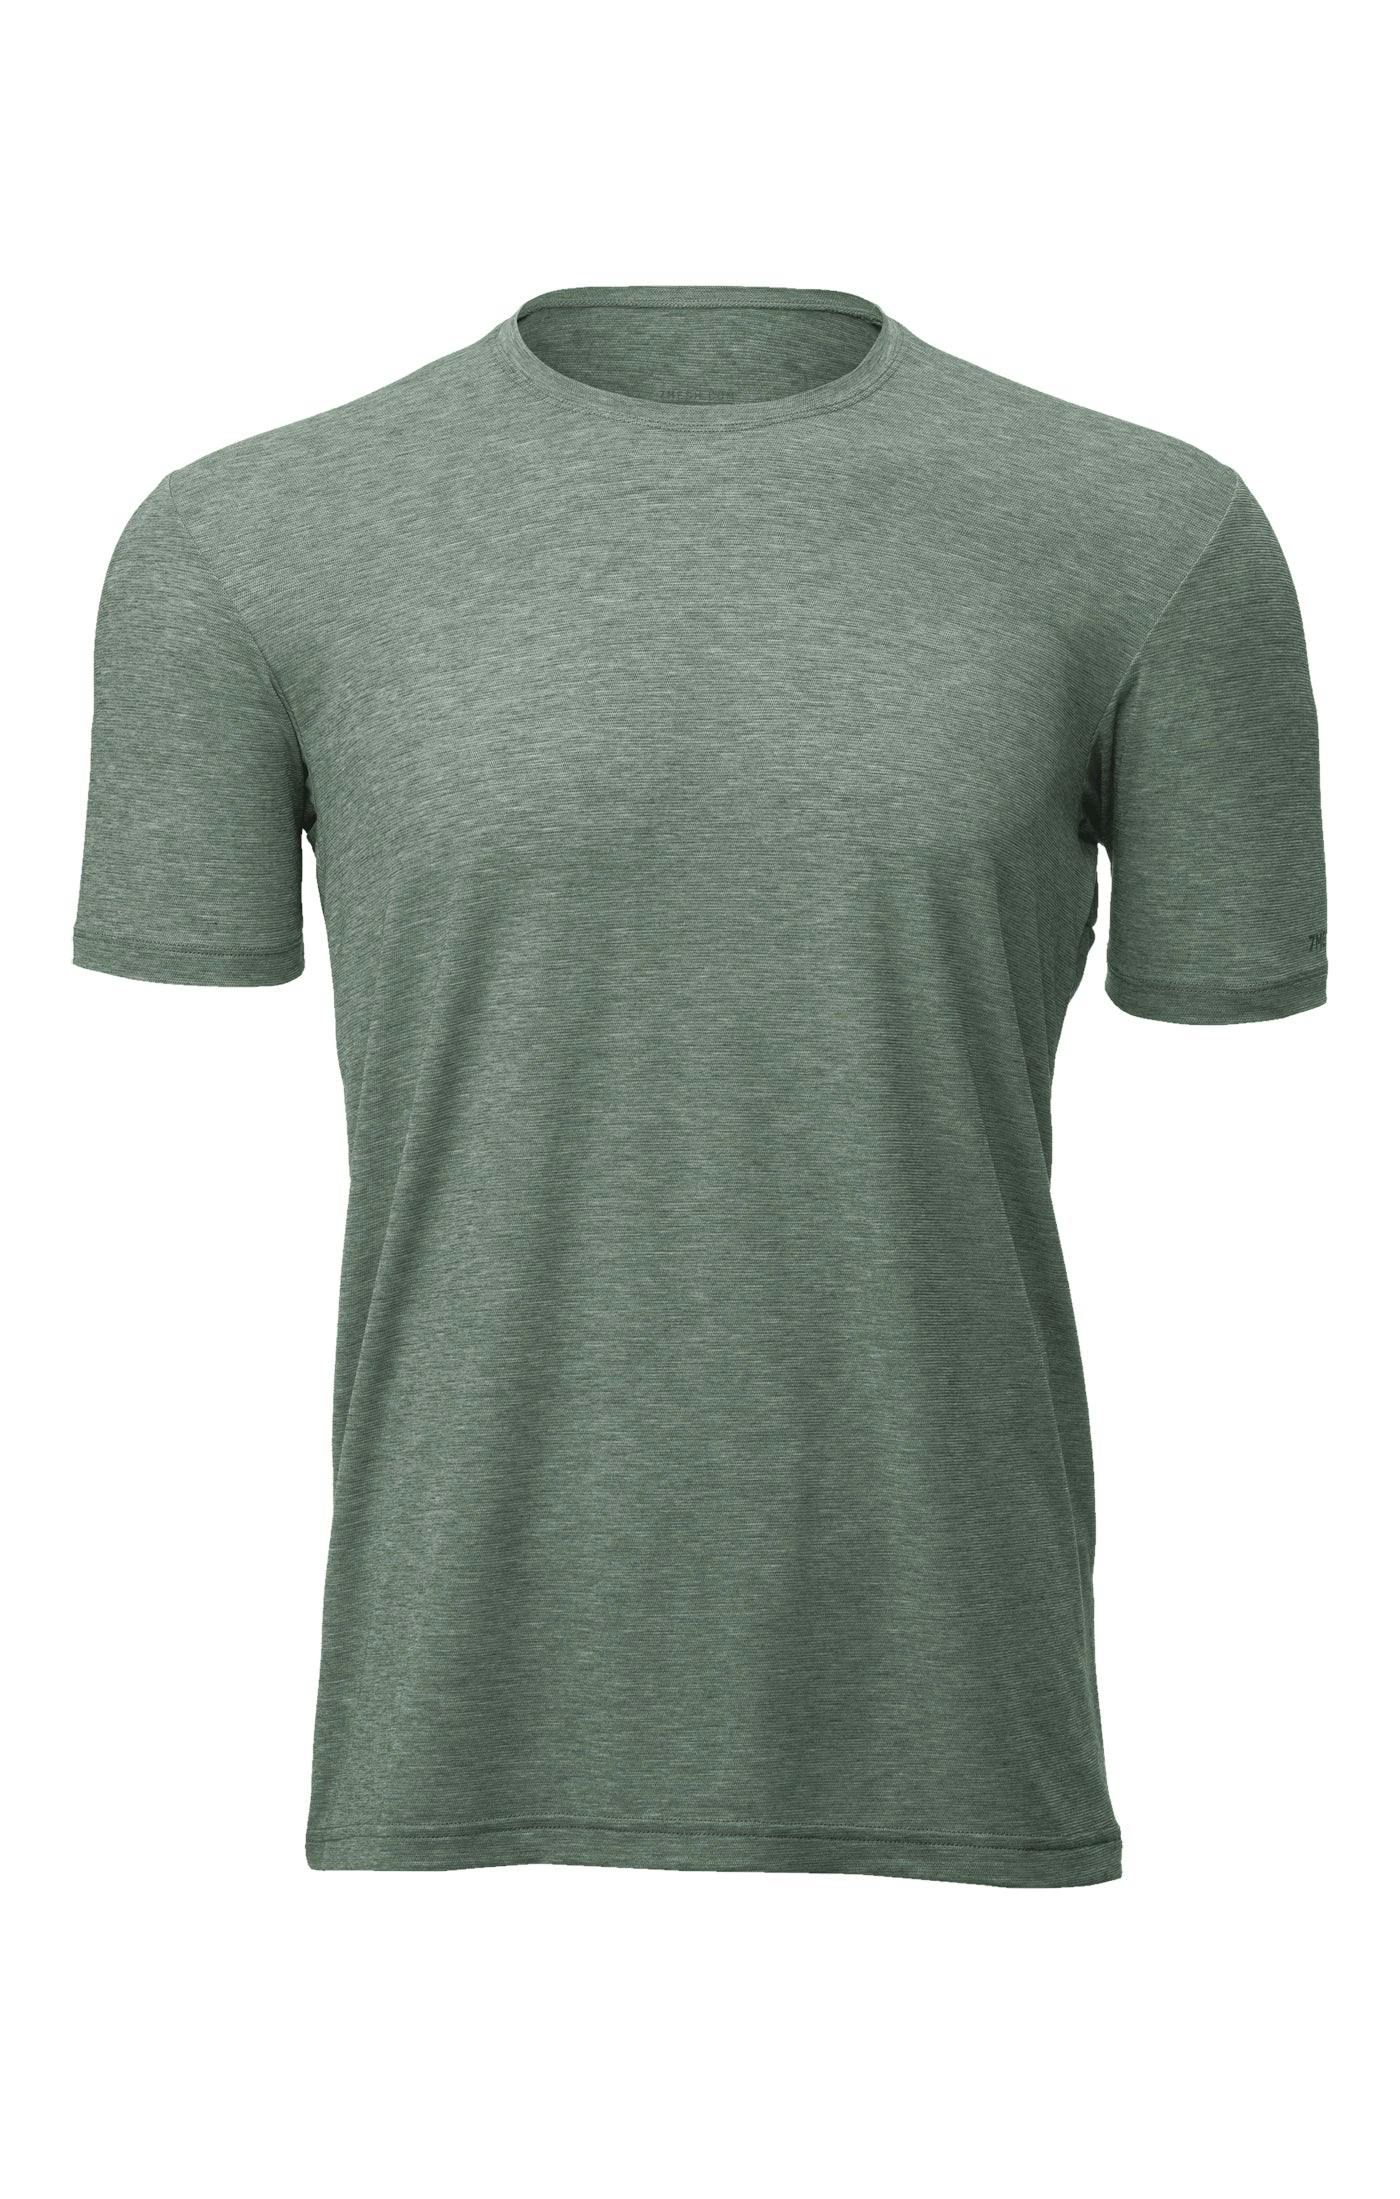 Elevate - Herren T-Shirt, kurzarm - Grün